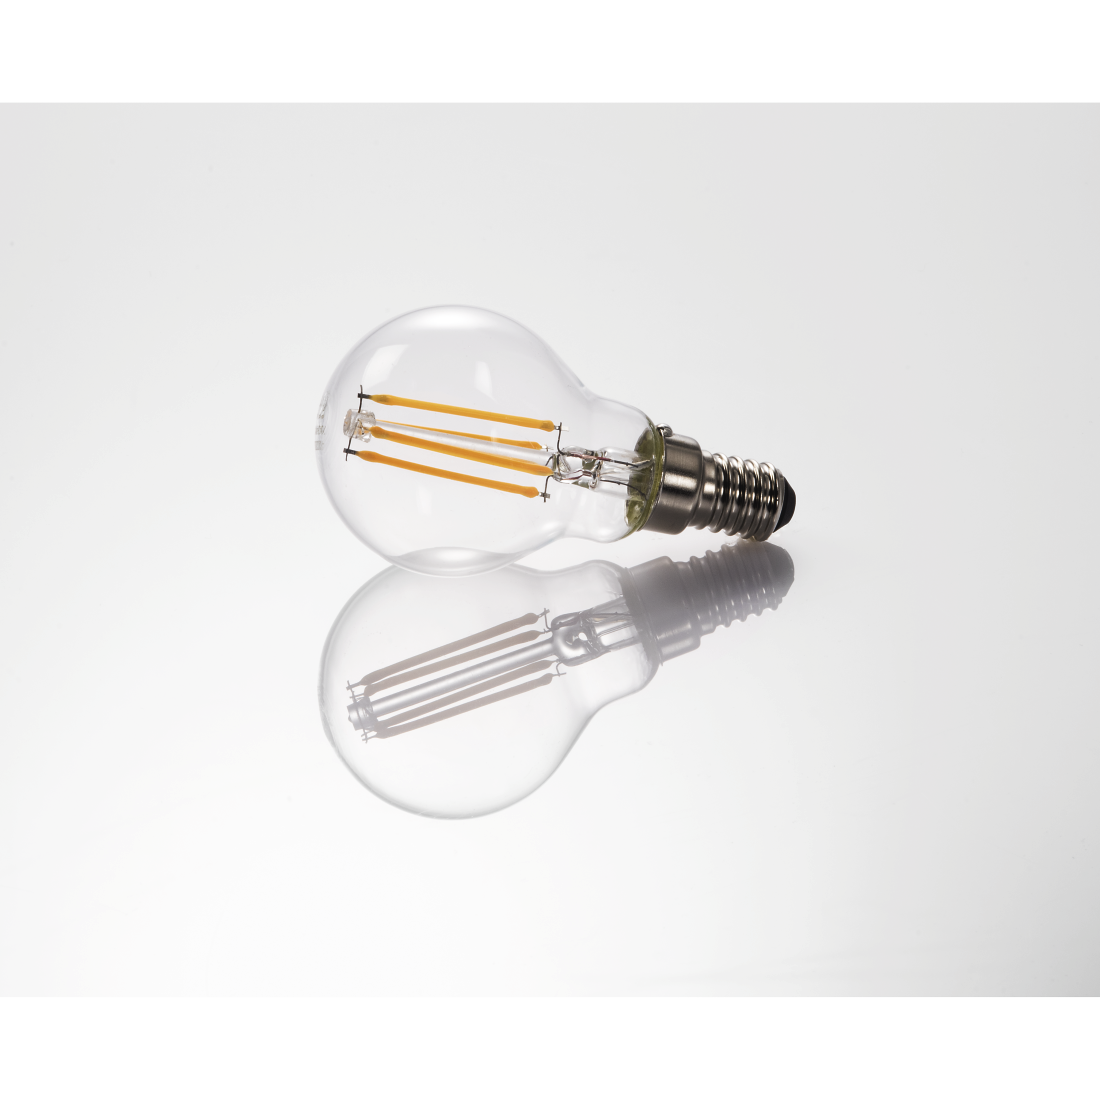 abx3 Druckfähige Abbildung 3 - Xavax, LED-Filament, E14, 470lm ersetzt 40W, Tropfenlampe, Warmweiß